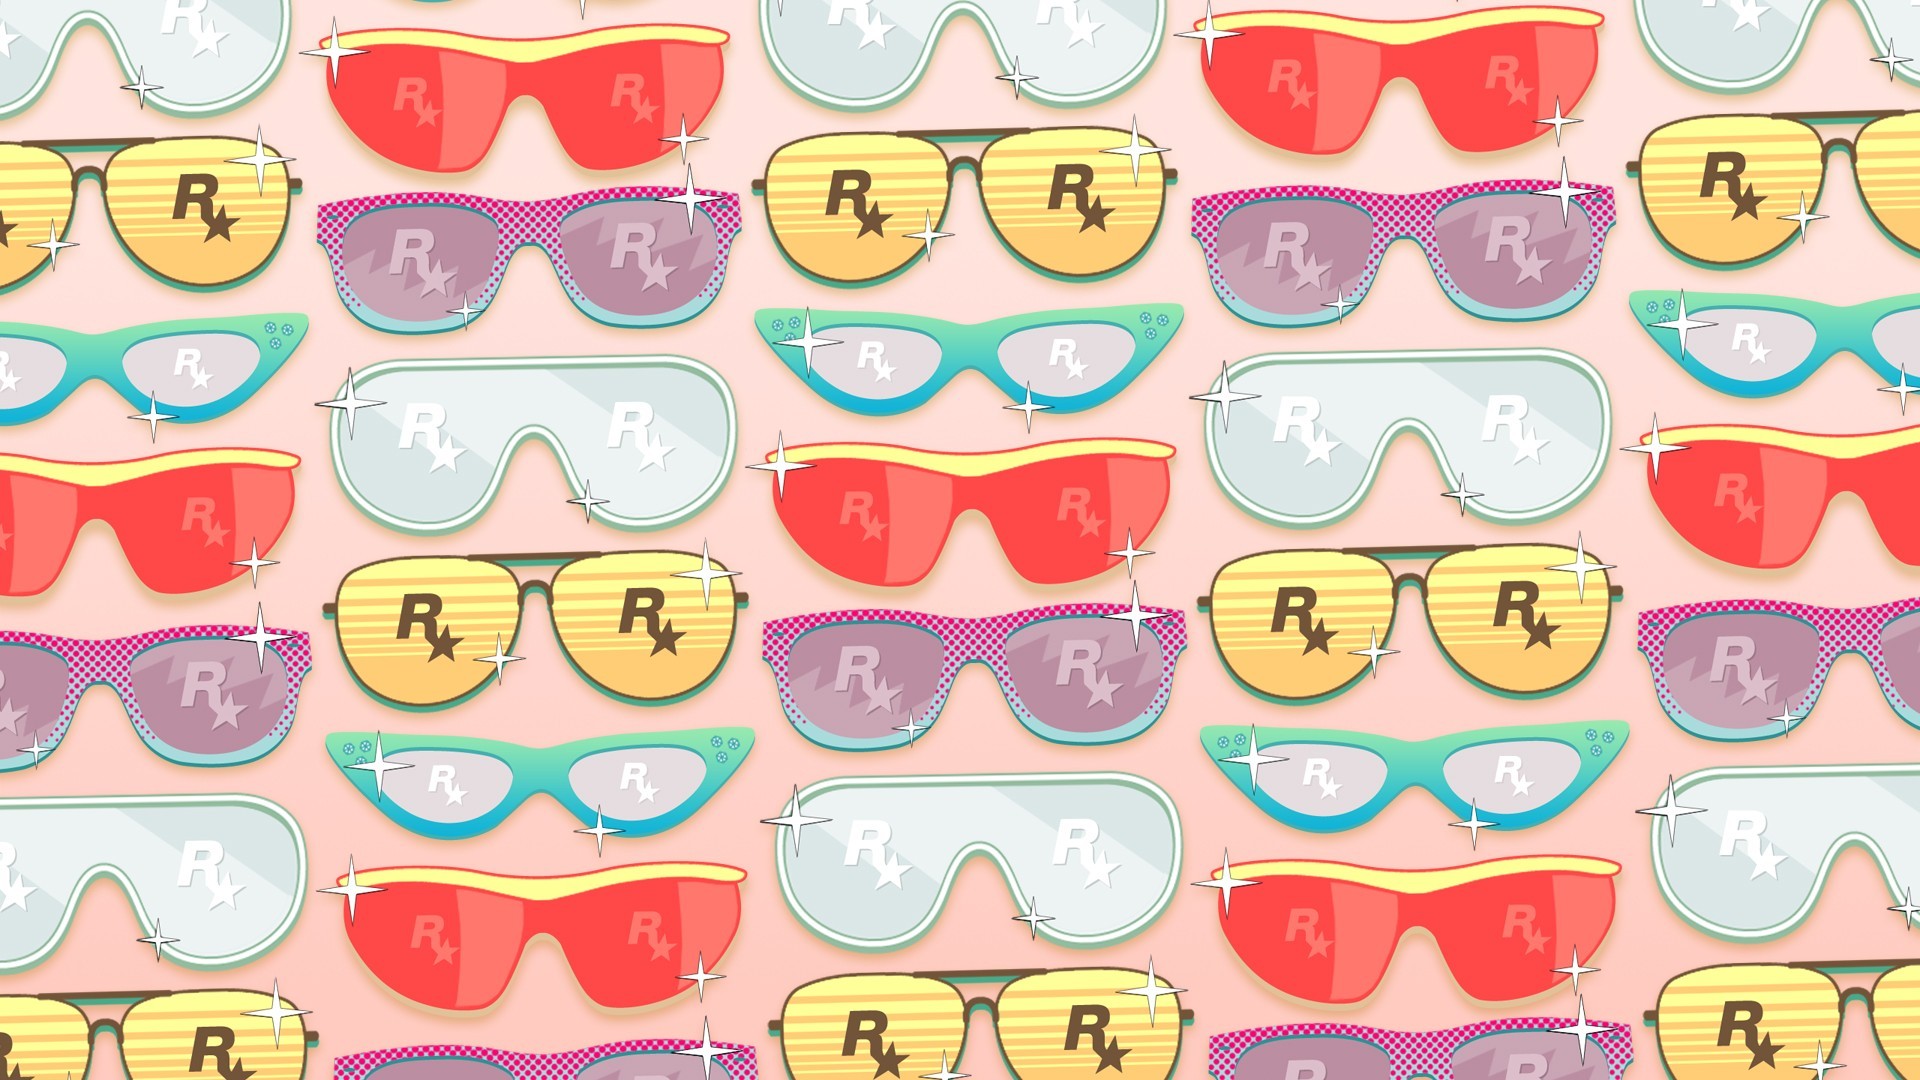 Rockstar Games, Sunglasses, Glasses, Video Games Wallpaper